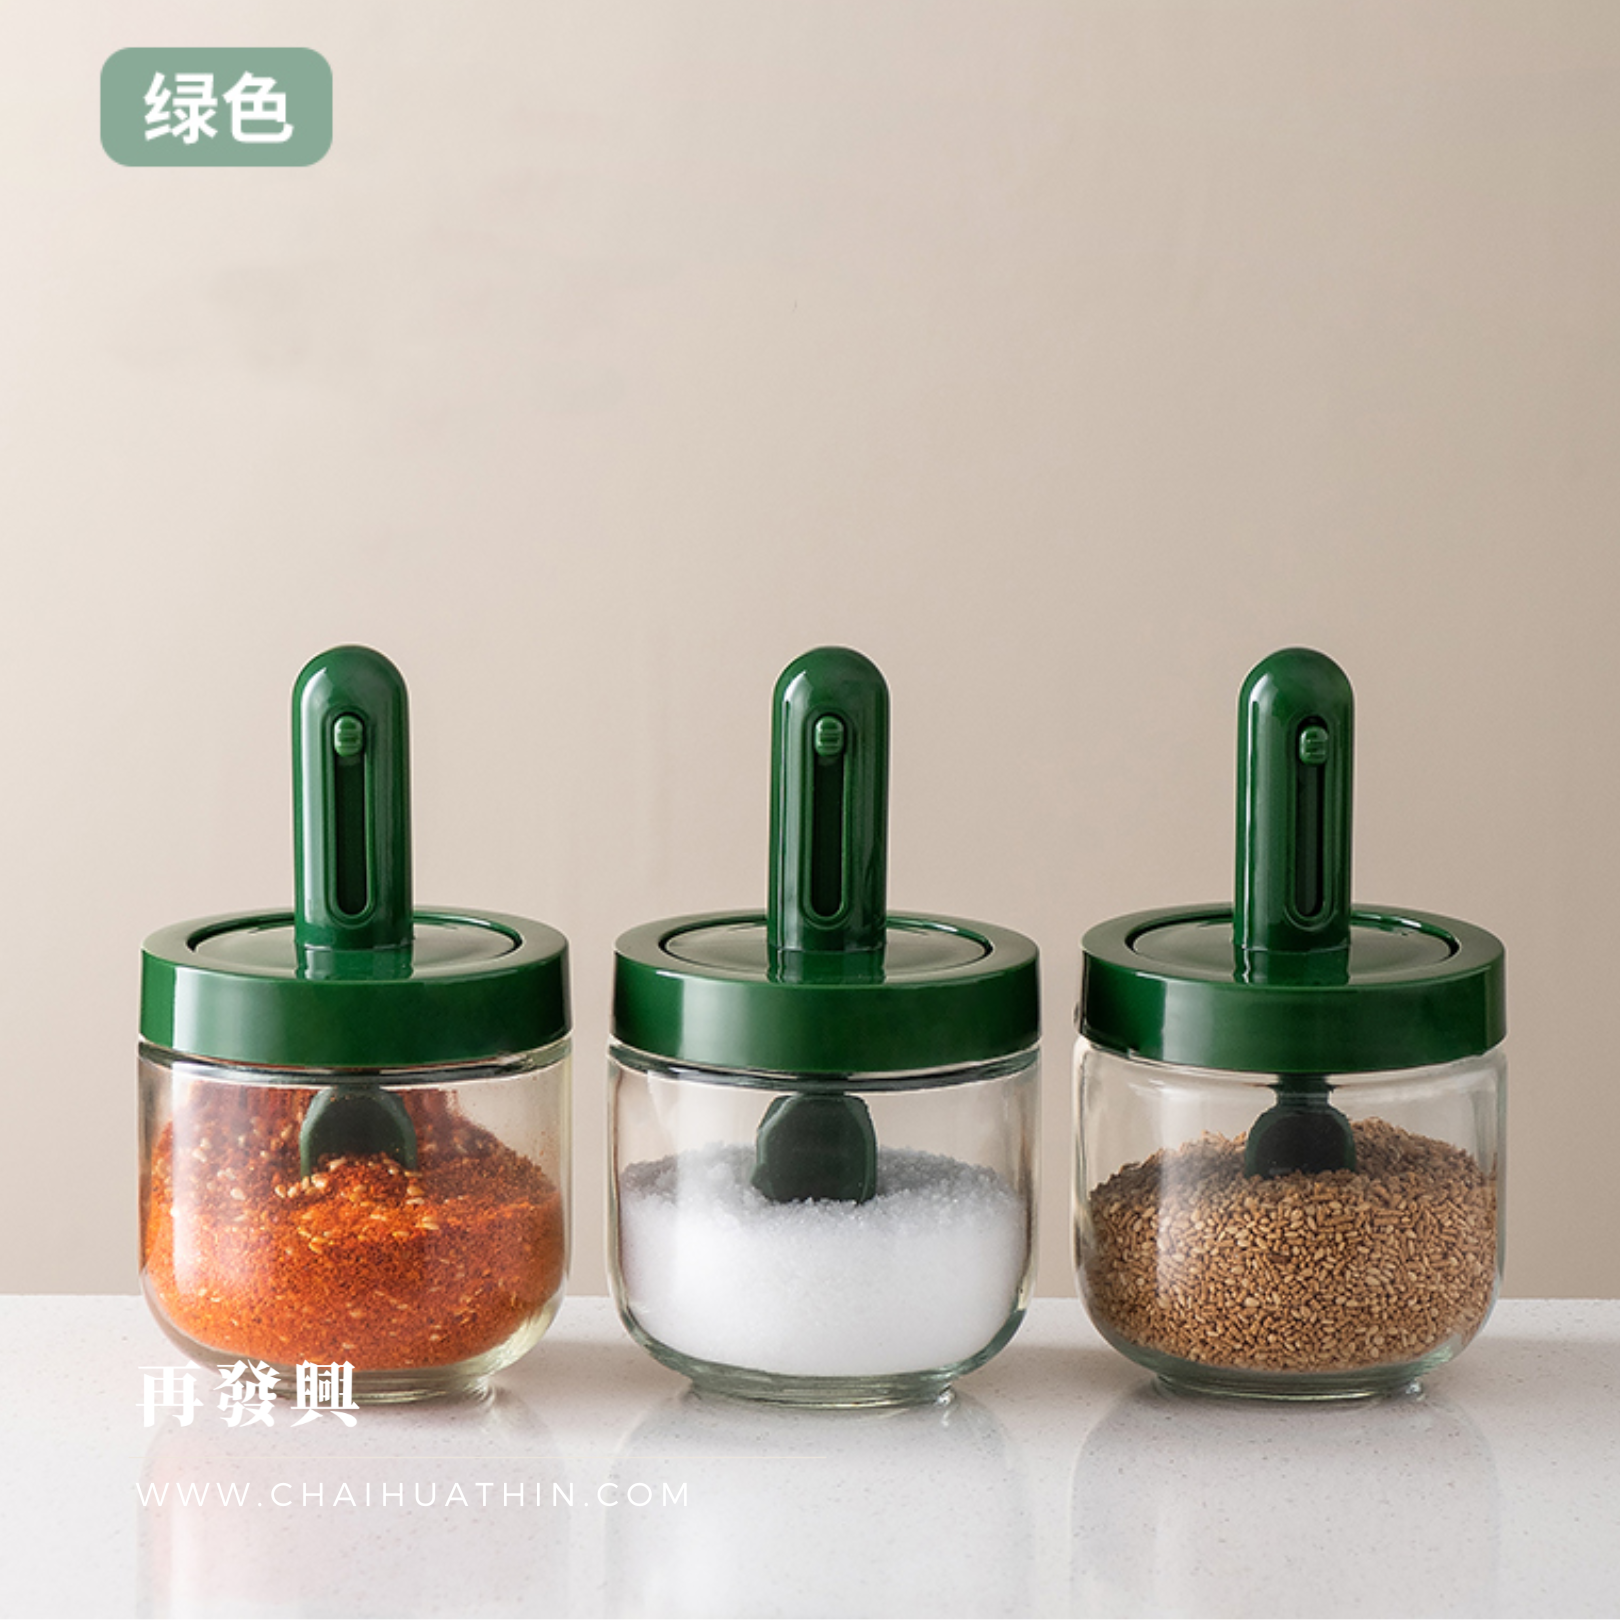 Seasoning Glass Jar Set (4 jars) 伸缩玻璃调料罐 (4罐)